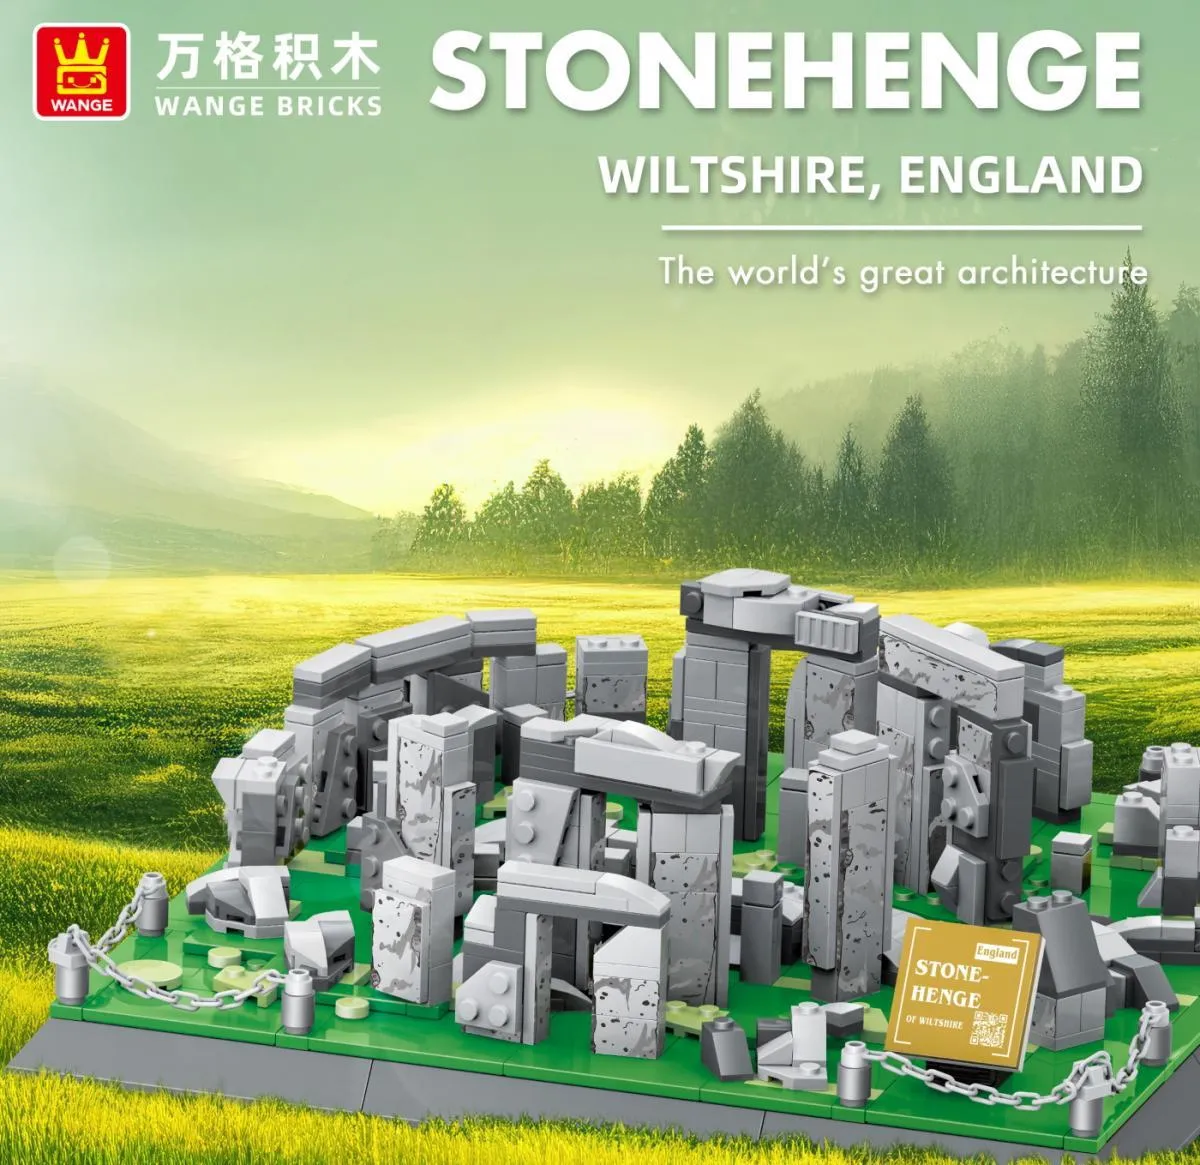 Stonehenge, Wiltshire England Gallery